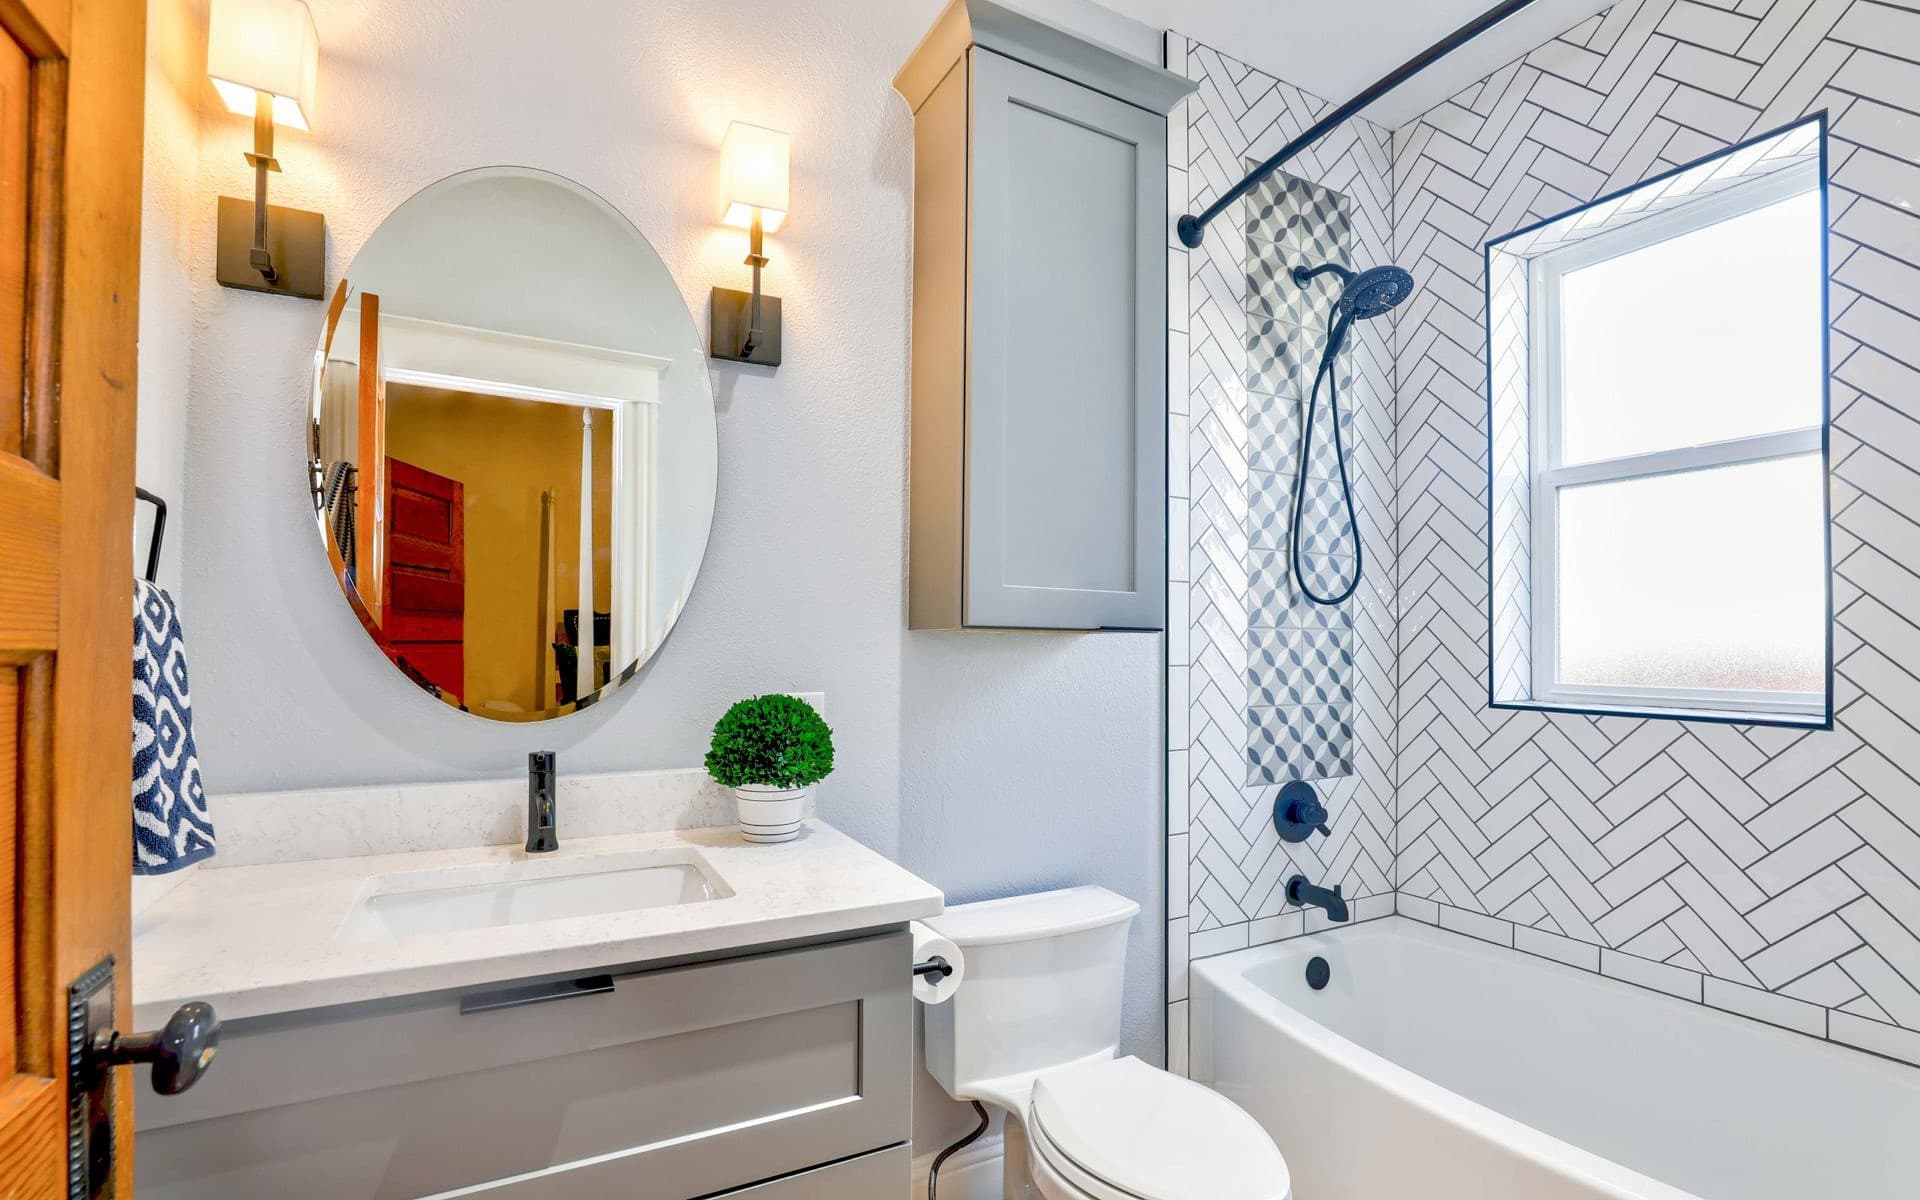 Interior Design - modern bathroom with herringbone shower tile and black fixtures